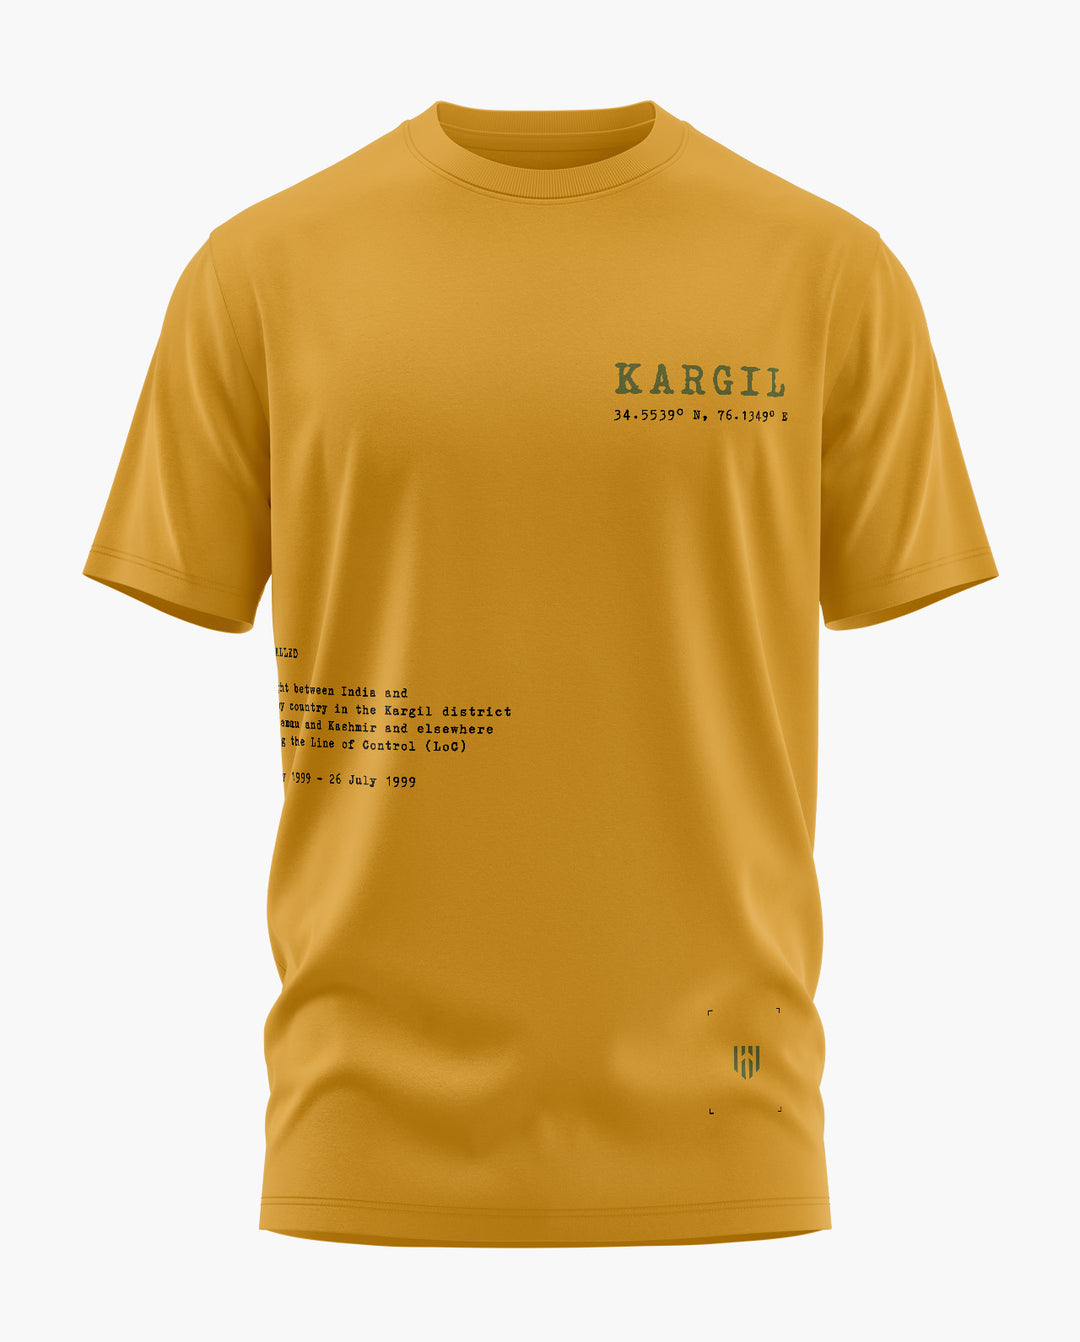 KARGIL War 1999 T-Shirt